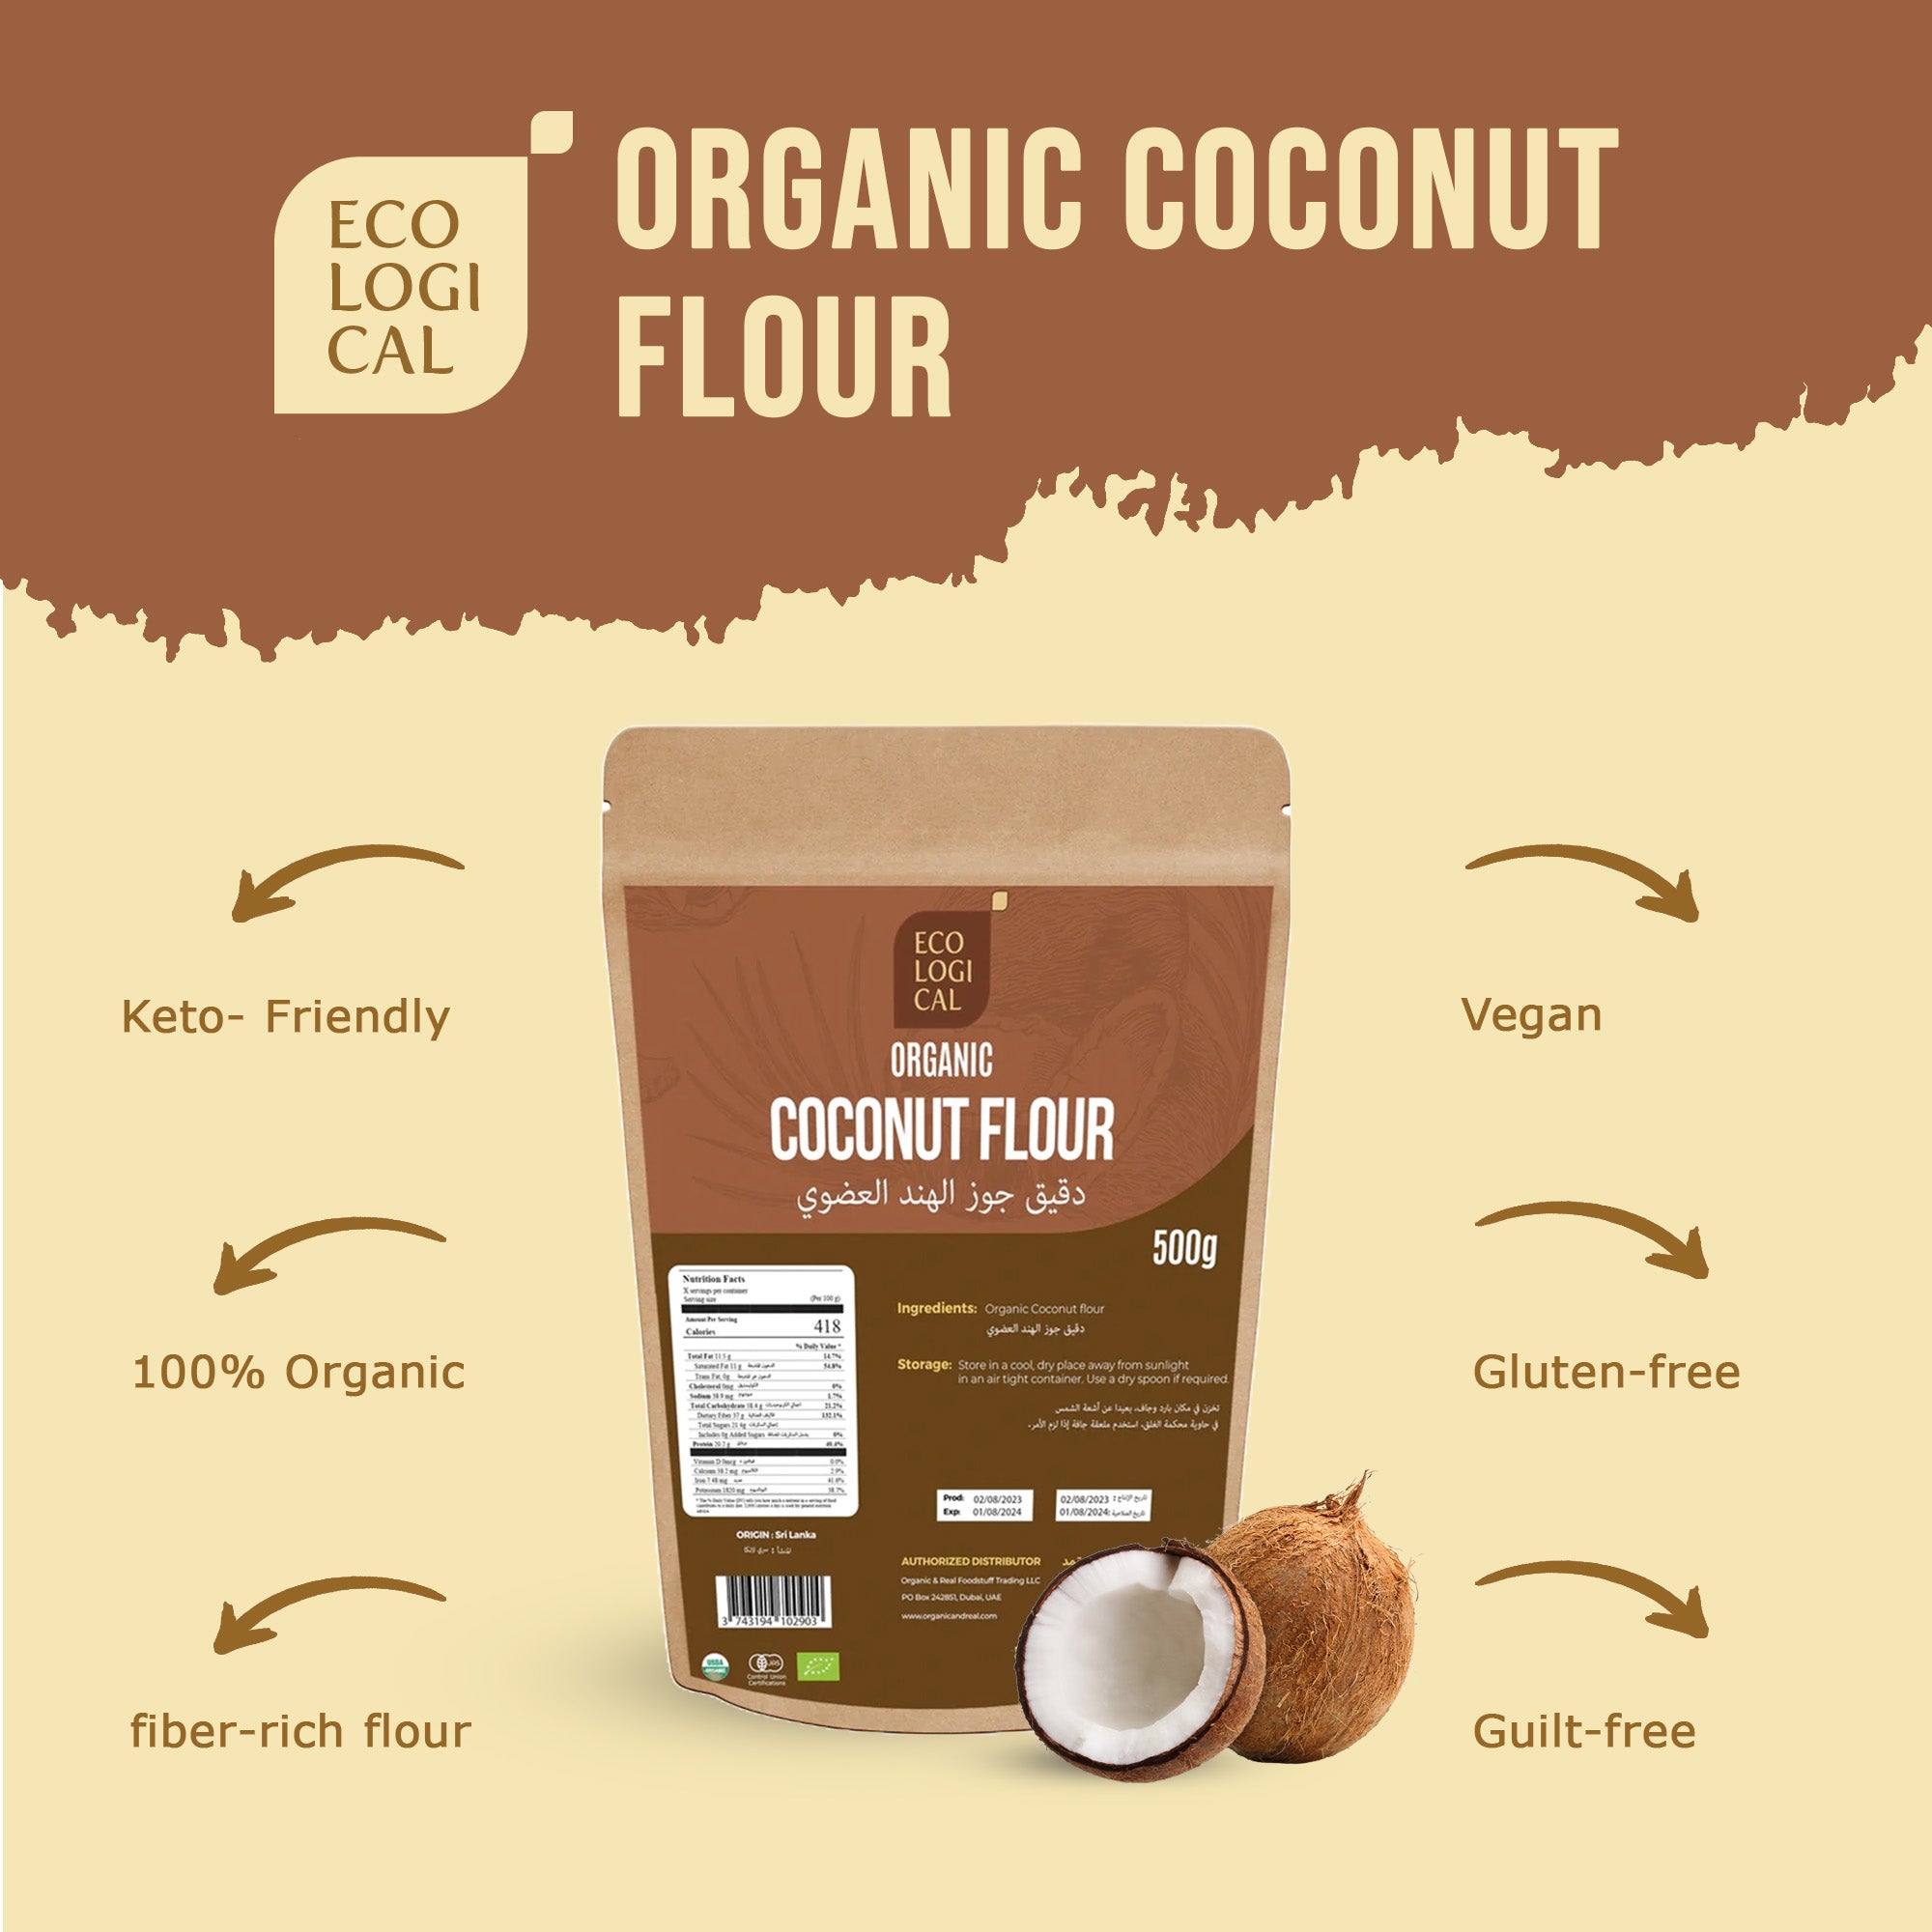 Premium ECOLOGICAL Organic Coconut Flour - Gluten-Free & Versatile for Healthy Baking